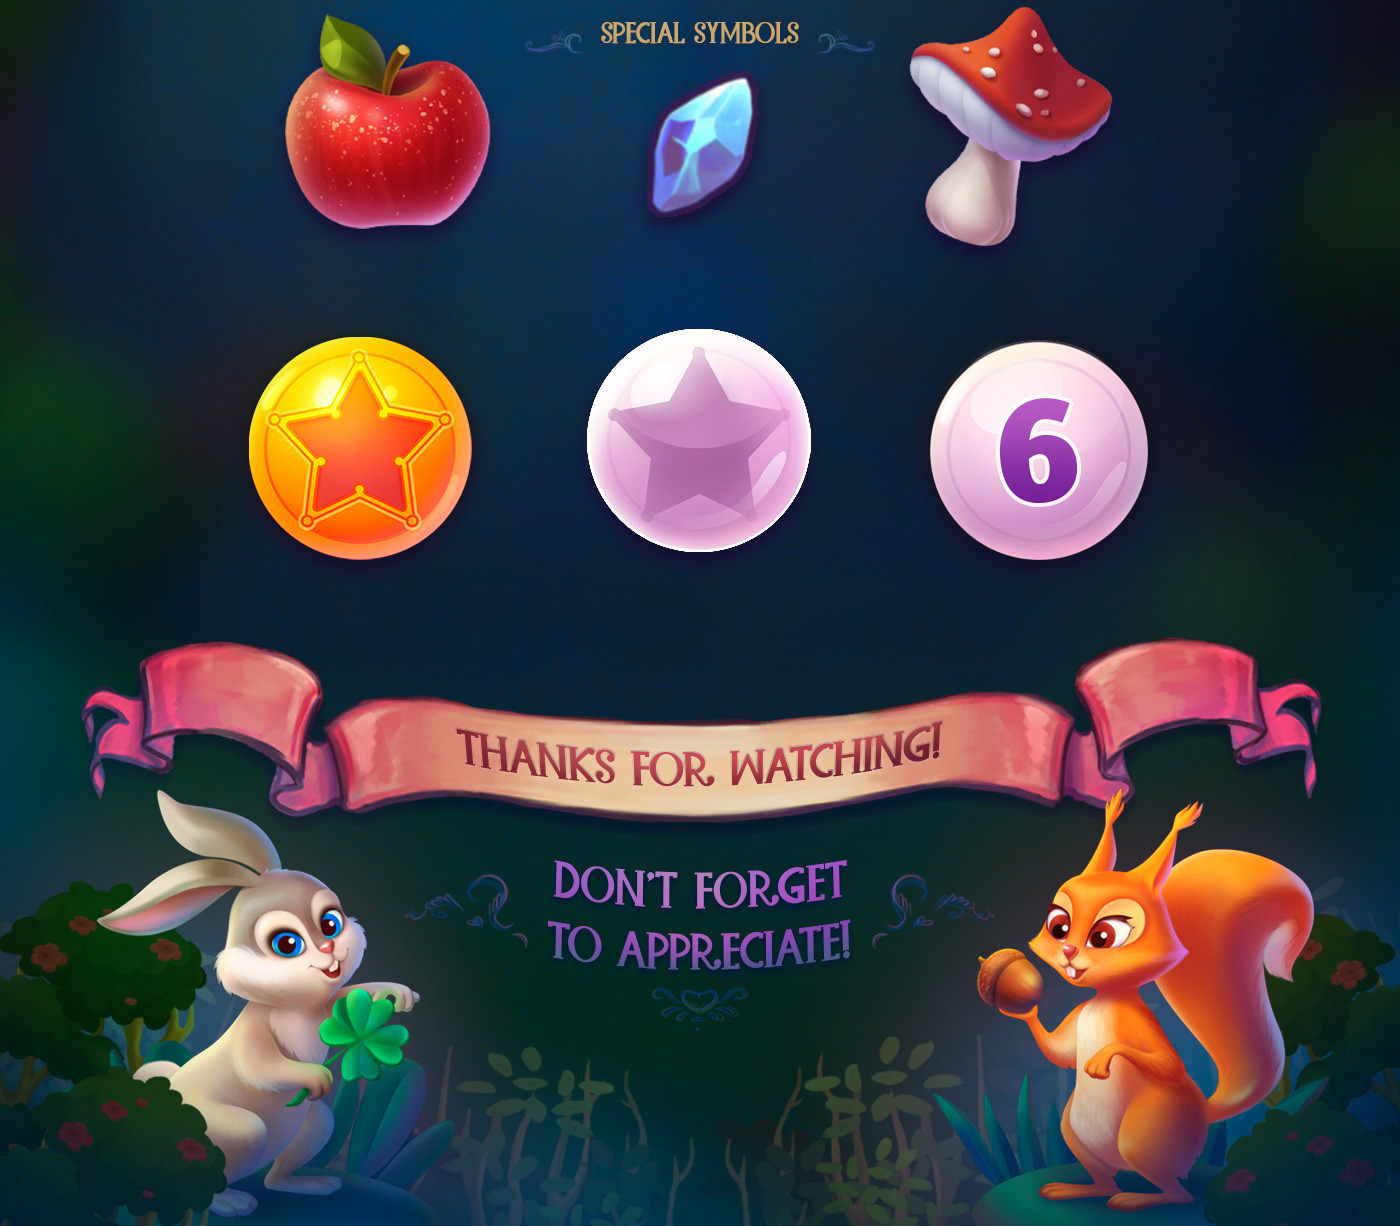 bingo Princess Game Art mobile game disney pixar Character design  Digital Art  cartoon game concept